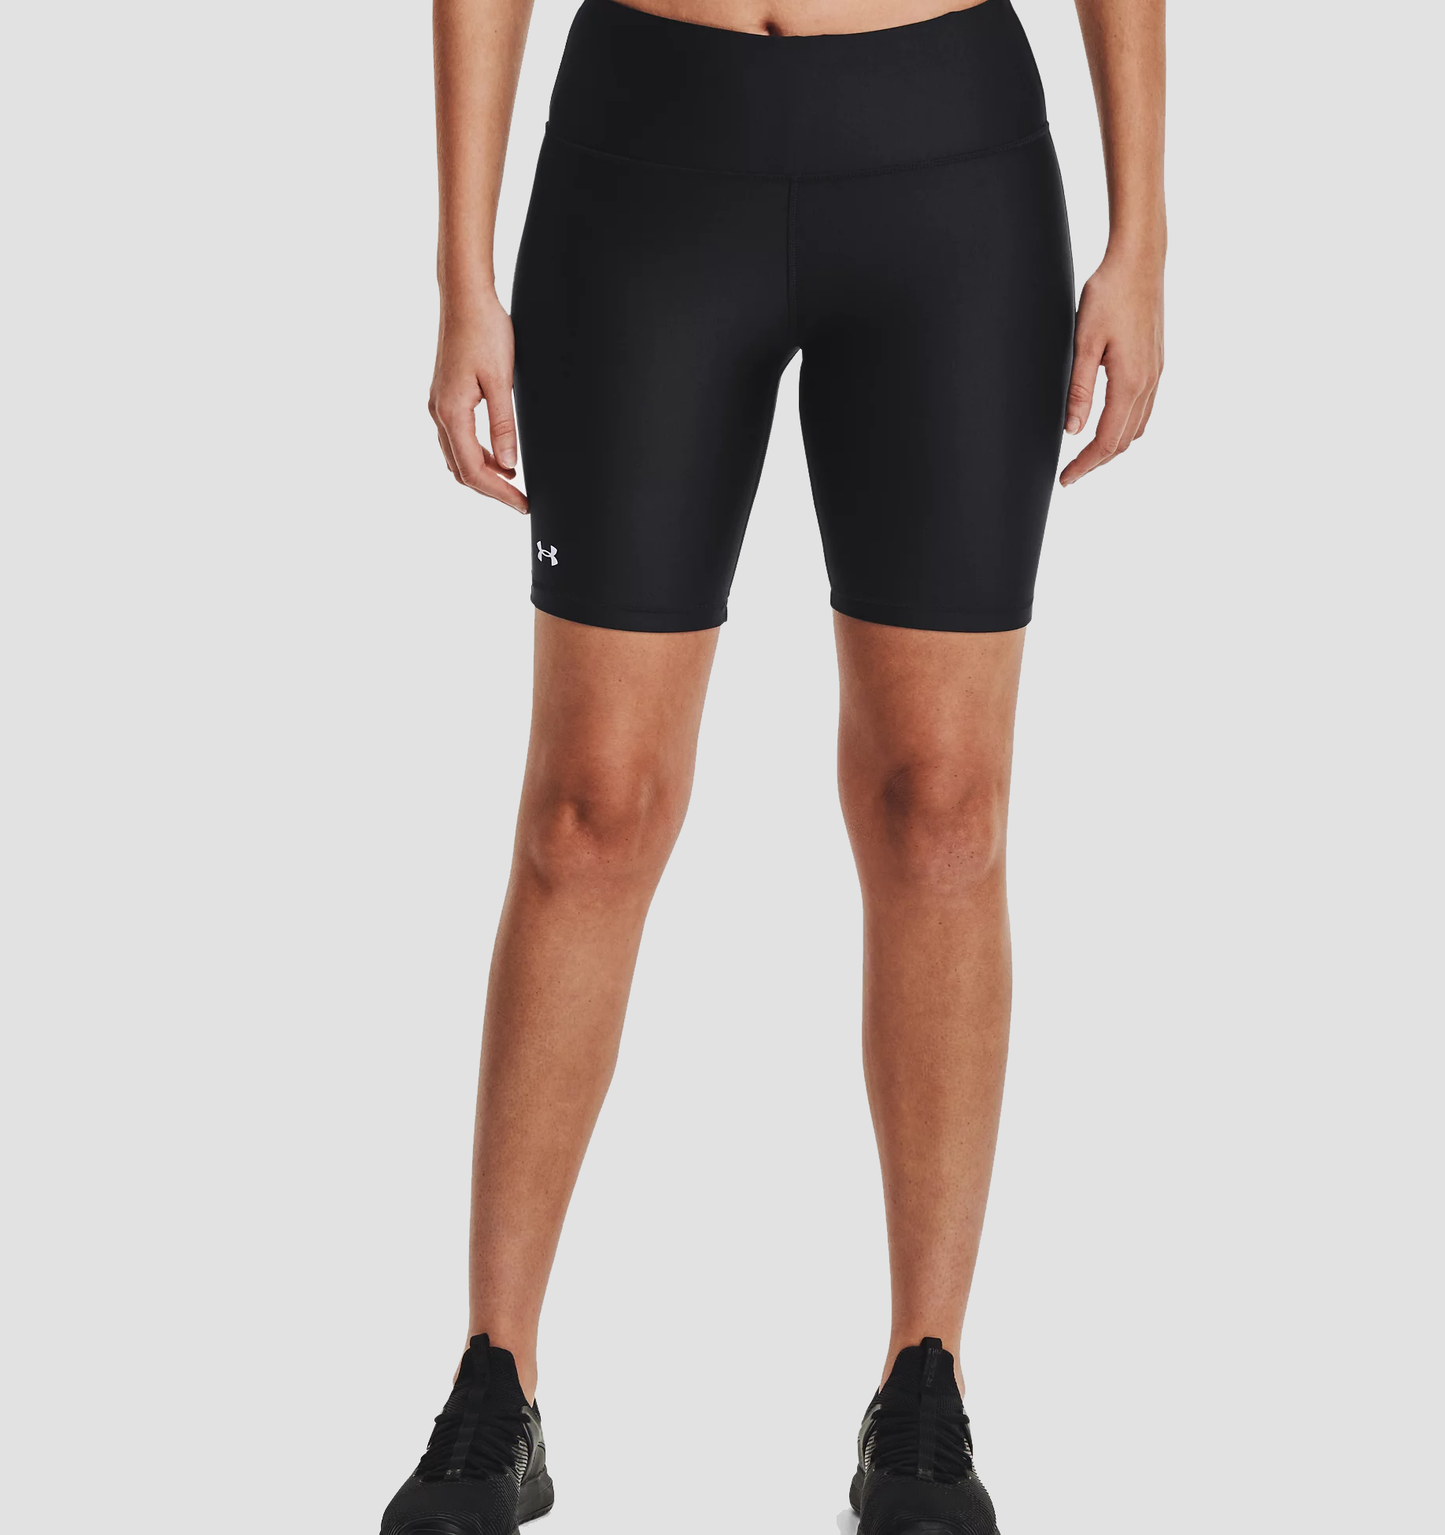 Under Armour Women's HeatGear® Armour Bike Shorts